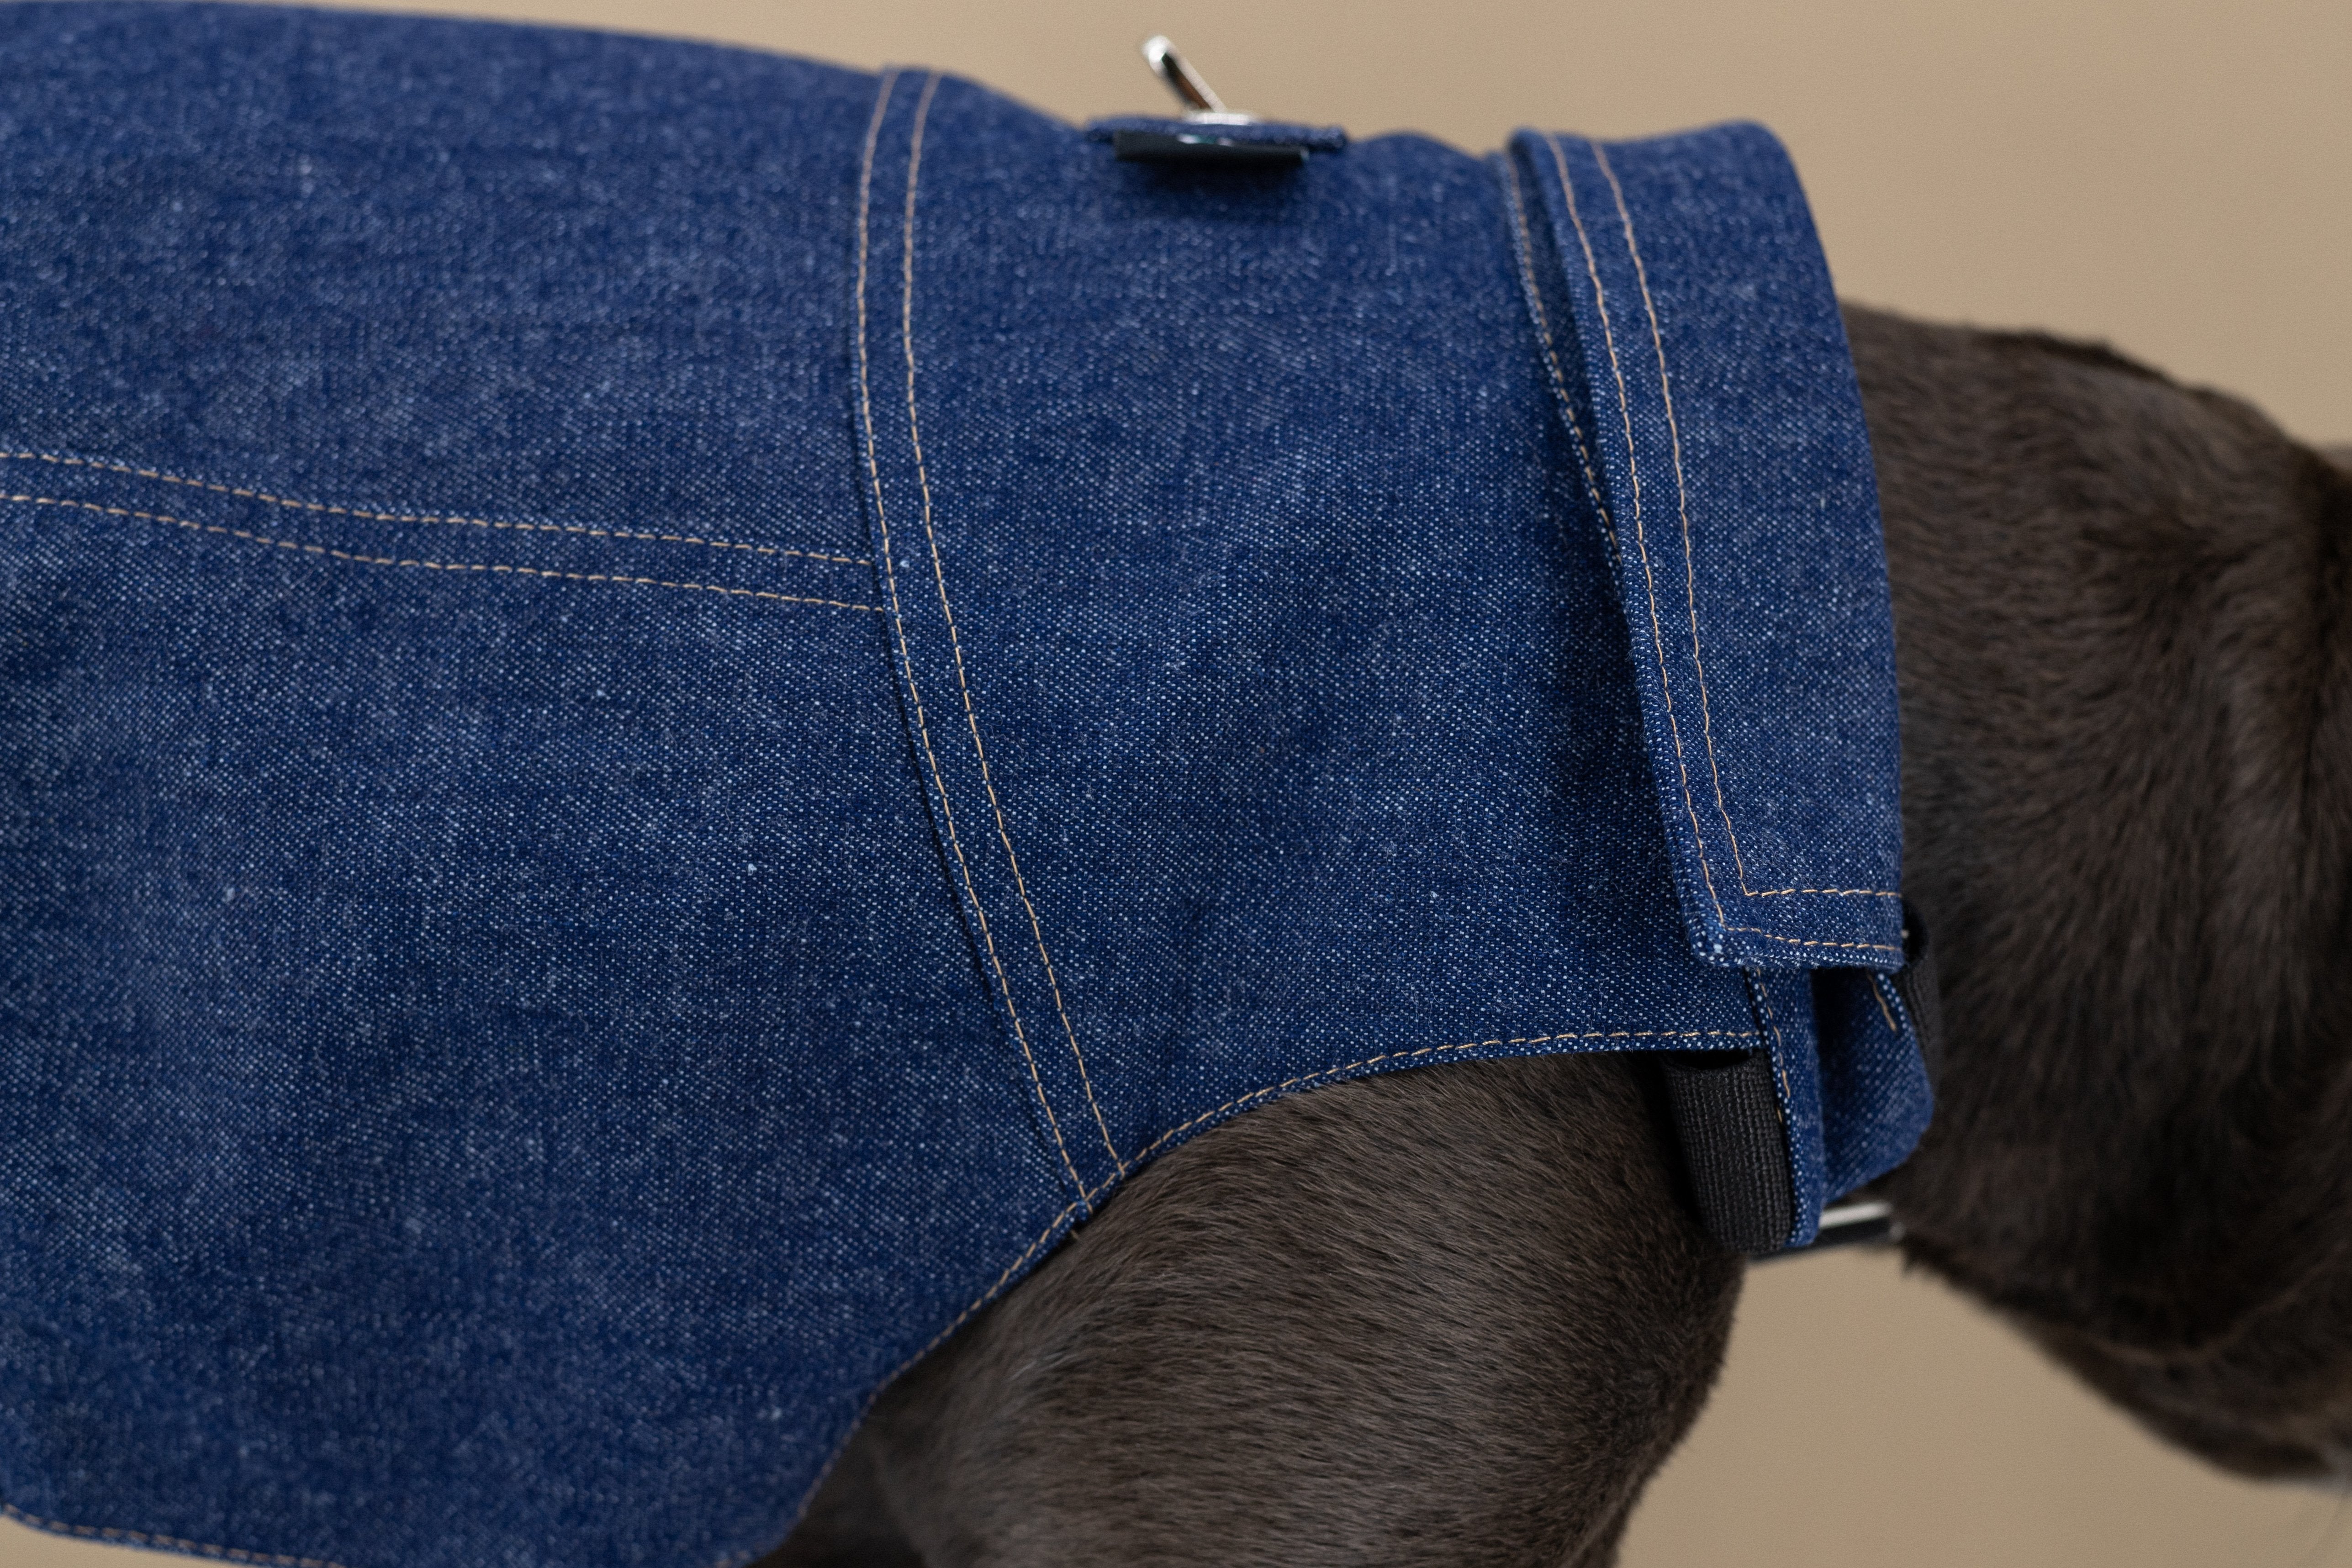 Dog Denim Jacket (K9 Harness Required)